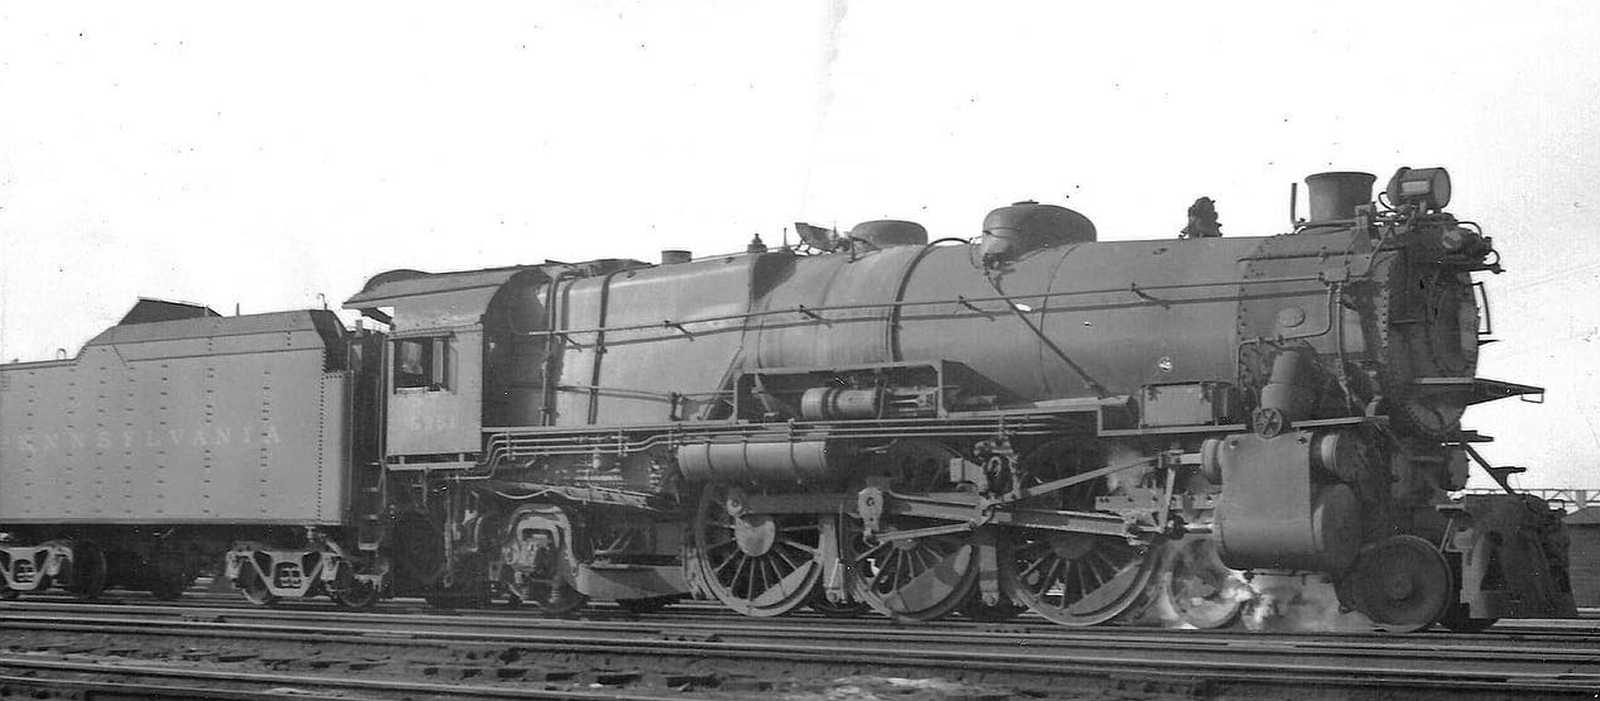 No. 5351 in December 1955 in Camden, New Jersey